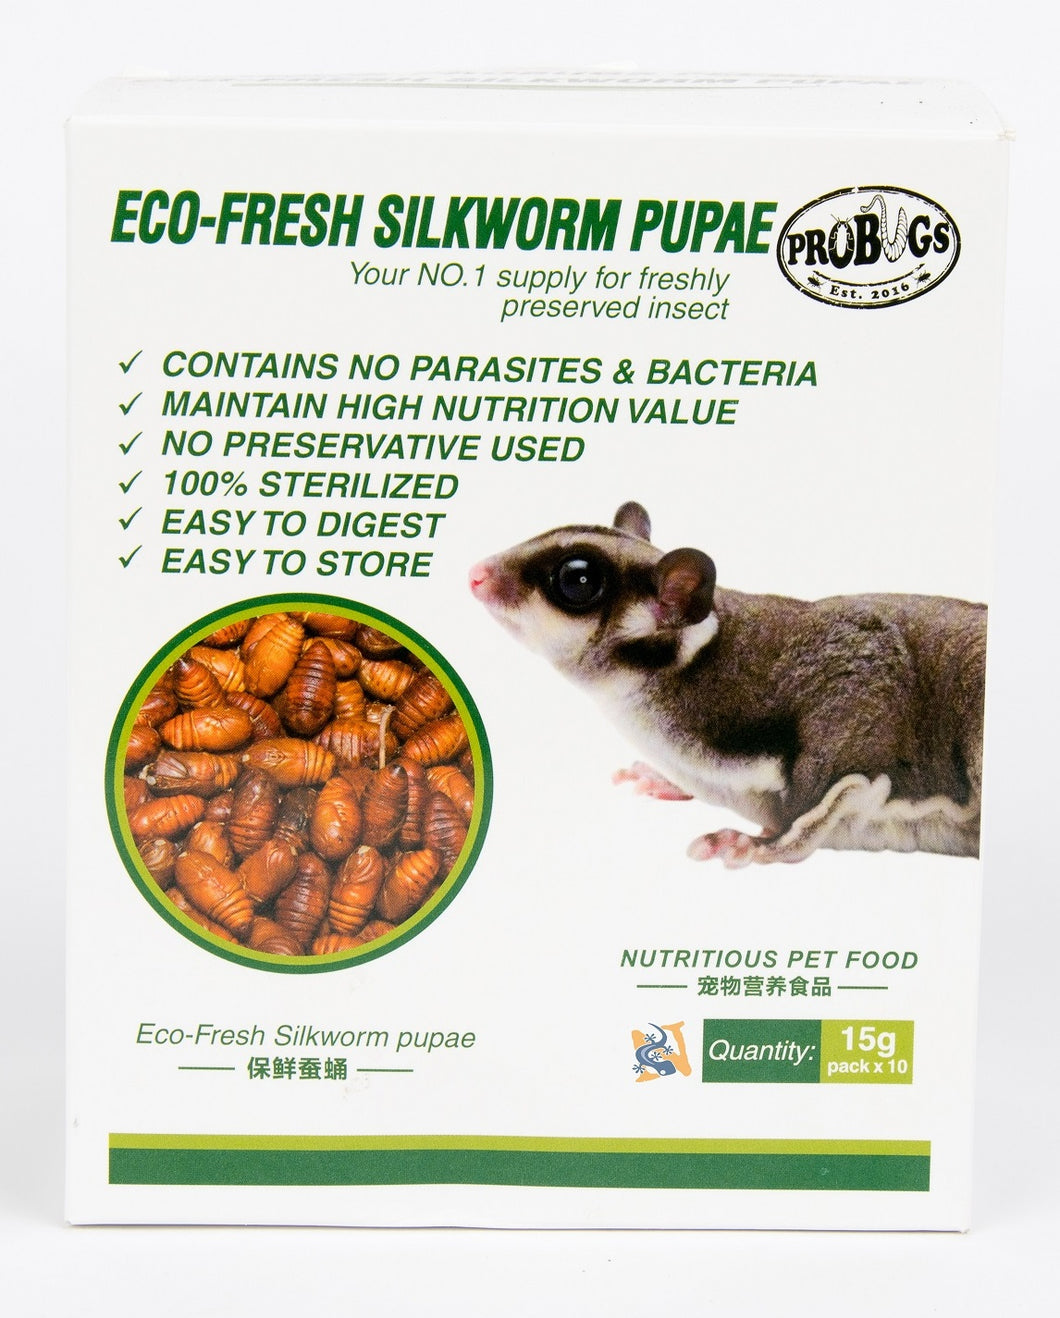 ProBugs Eco-Fresh Silkworm Pupae